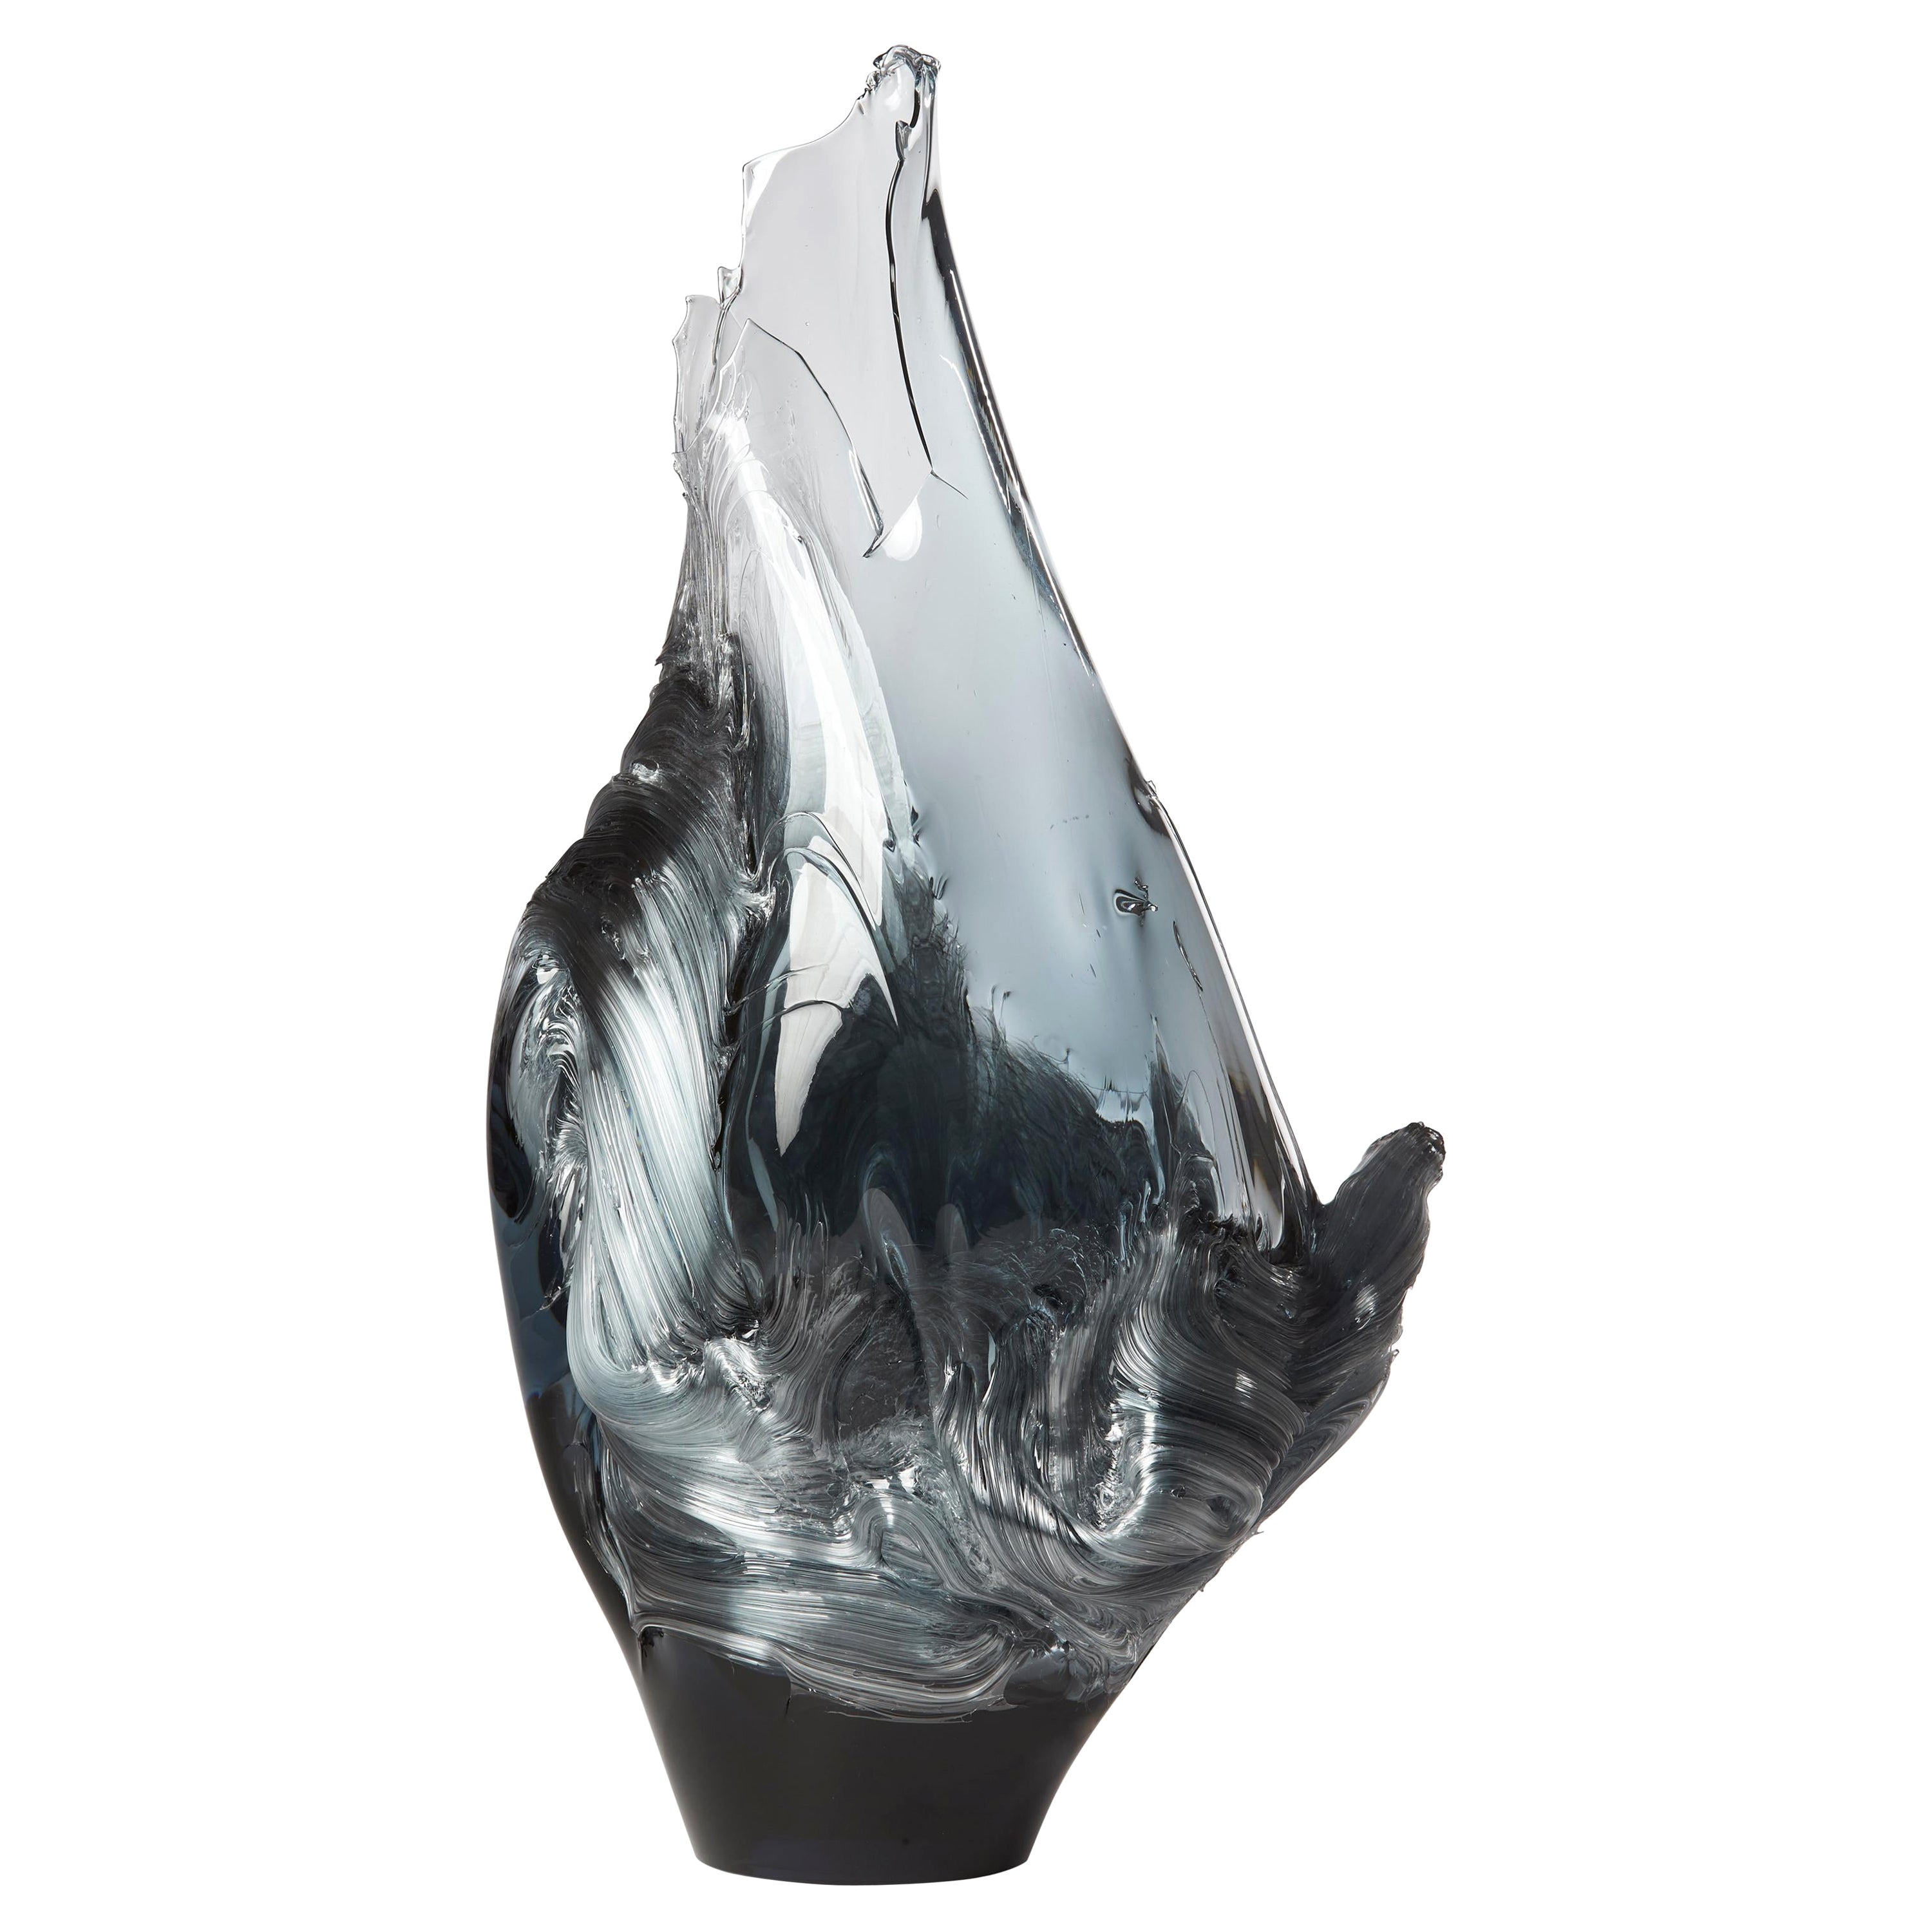 Extraordinary Glass Vase by Contemporary Japanese Artist Shohei Yokoyama